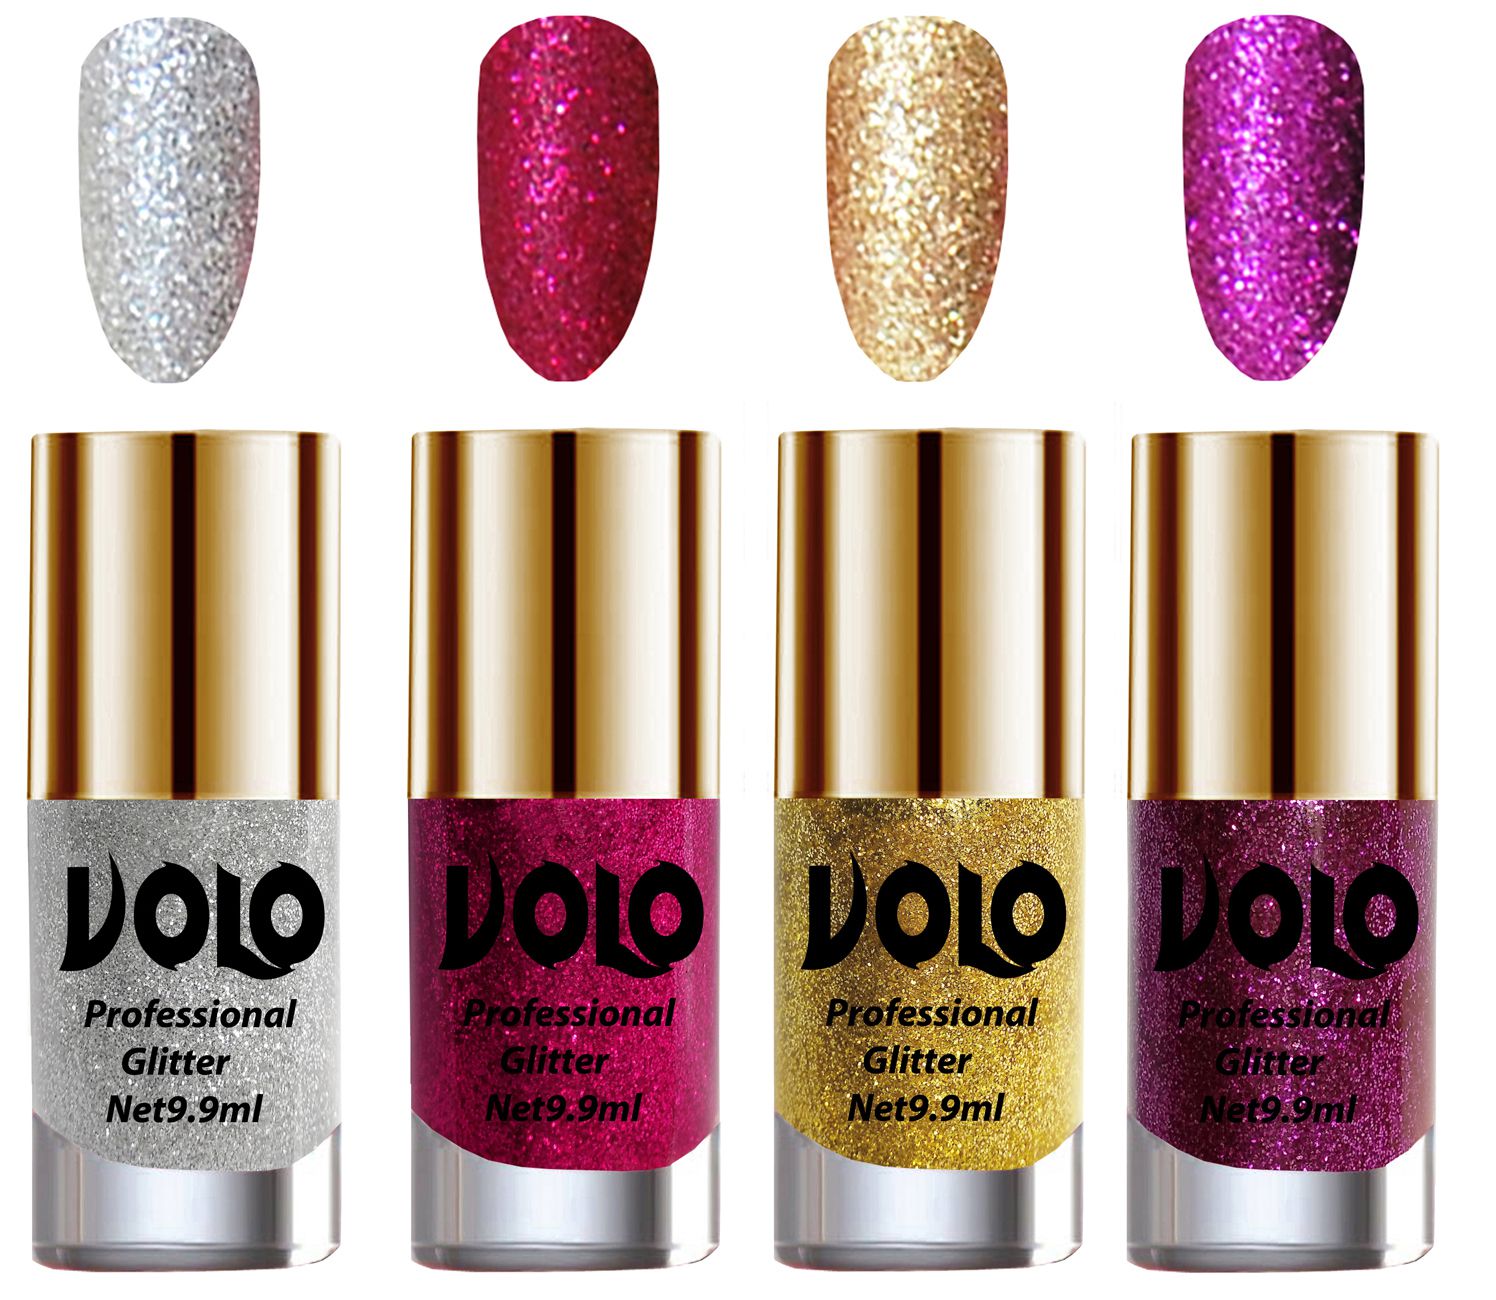     			VOLO Professionally Used Glitter Shine Nail Polish Silver,Magenta,Gold Purple Pack of 4 39 mL